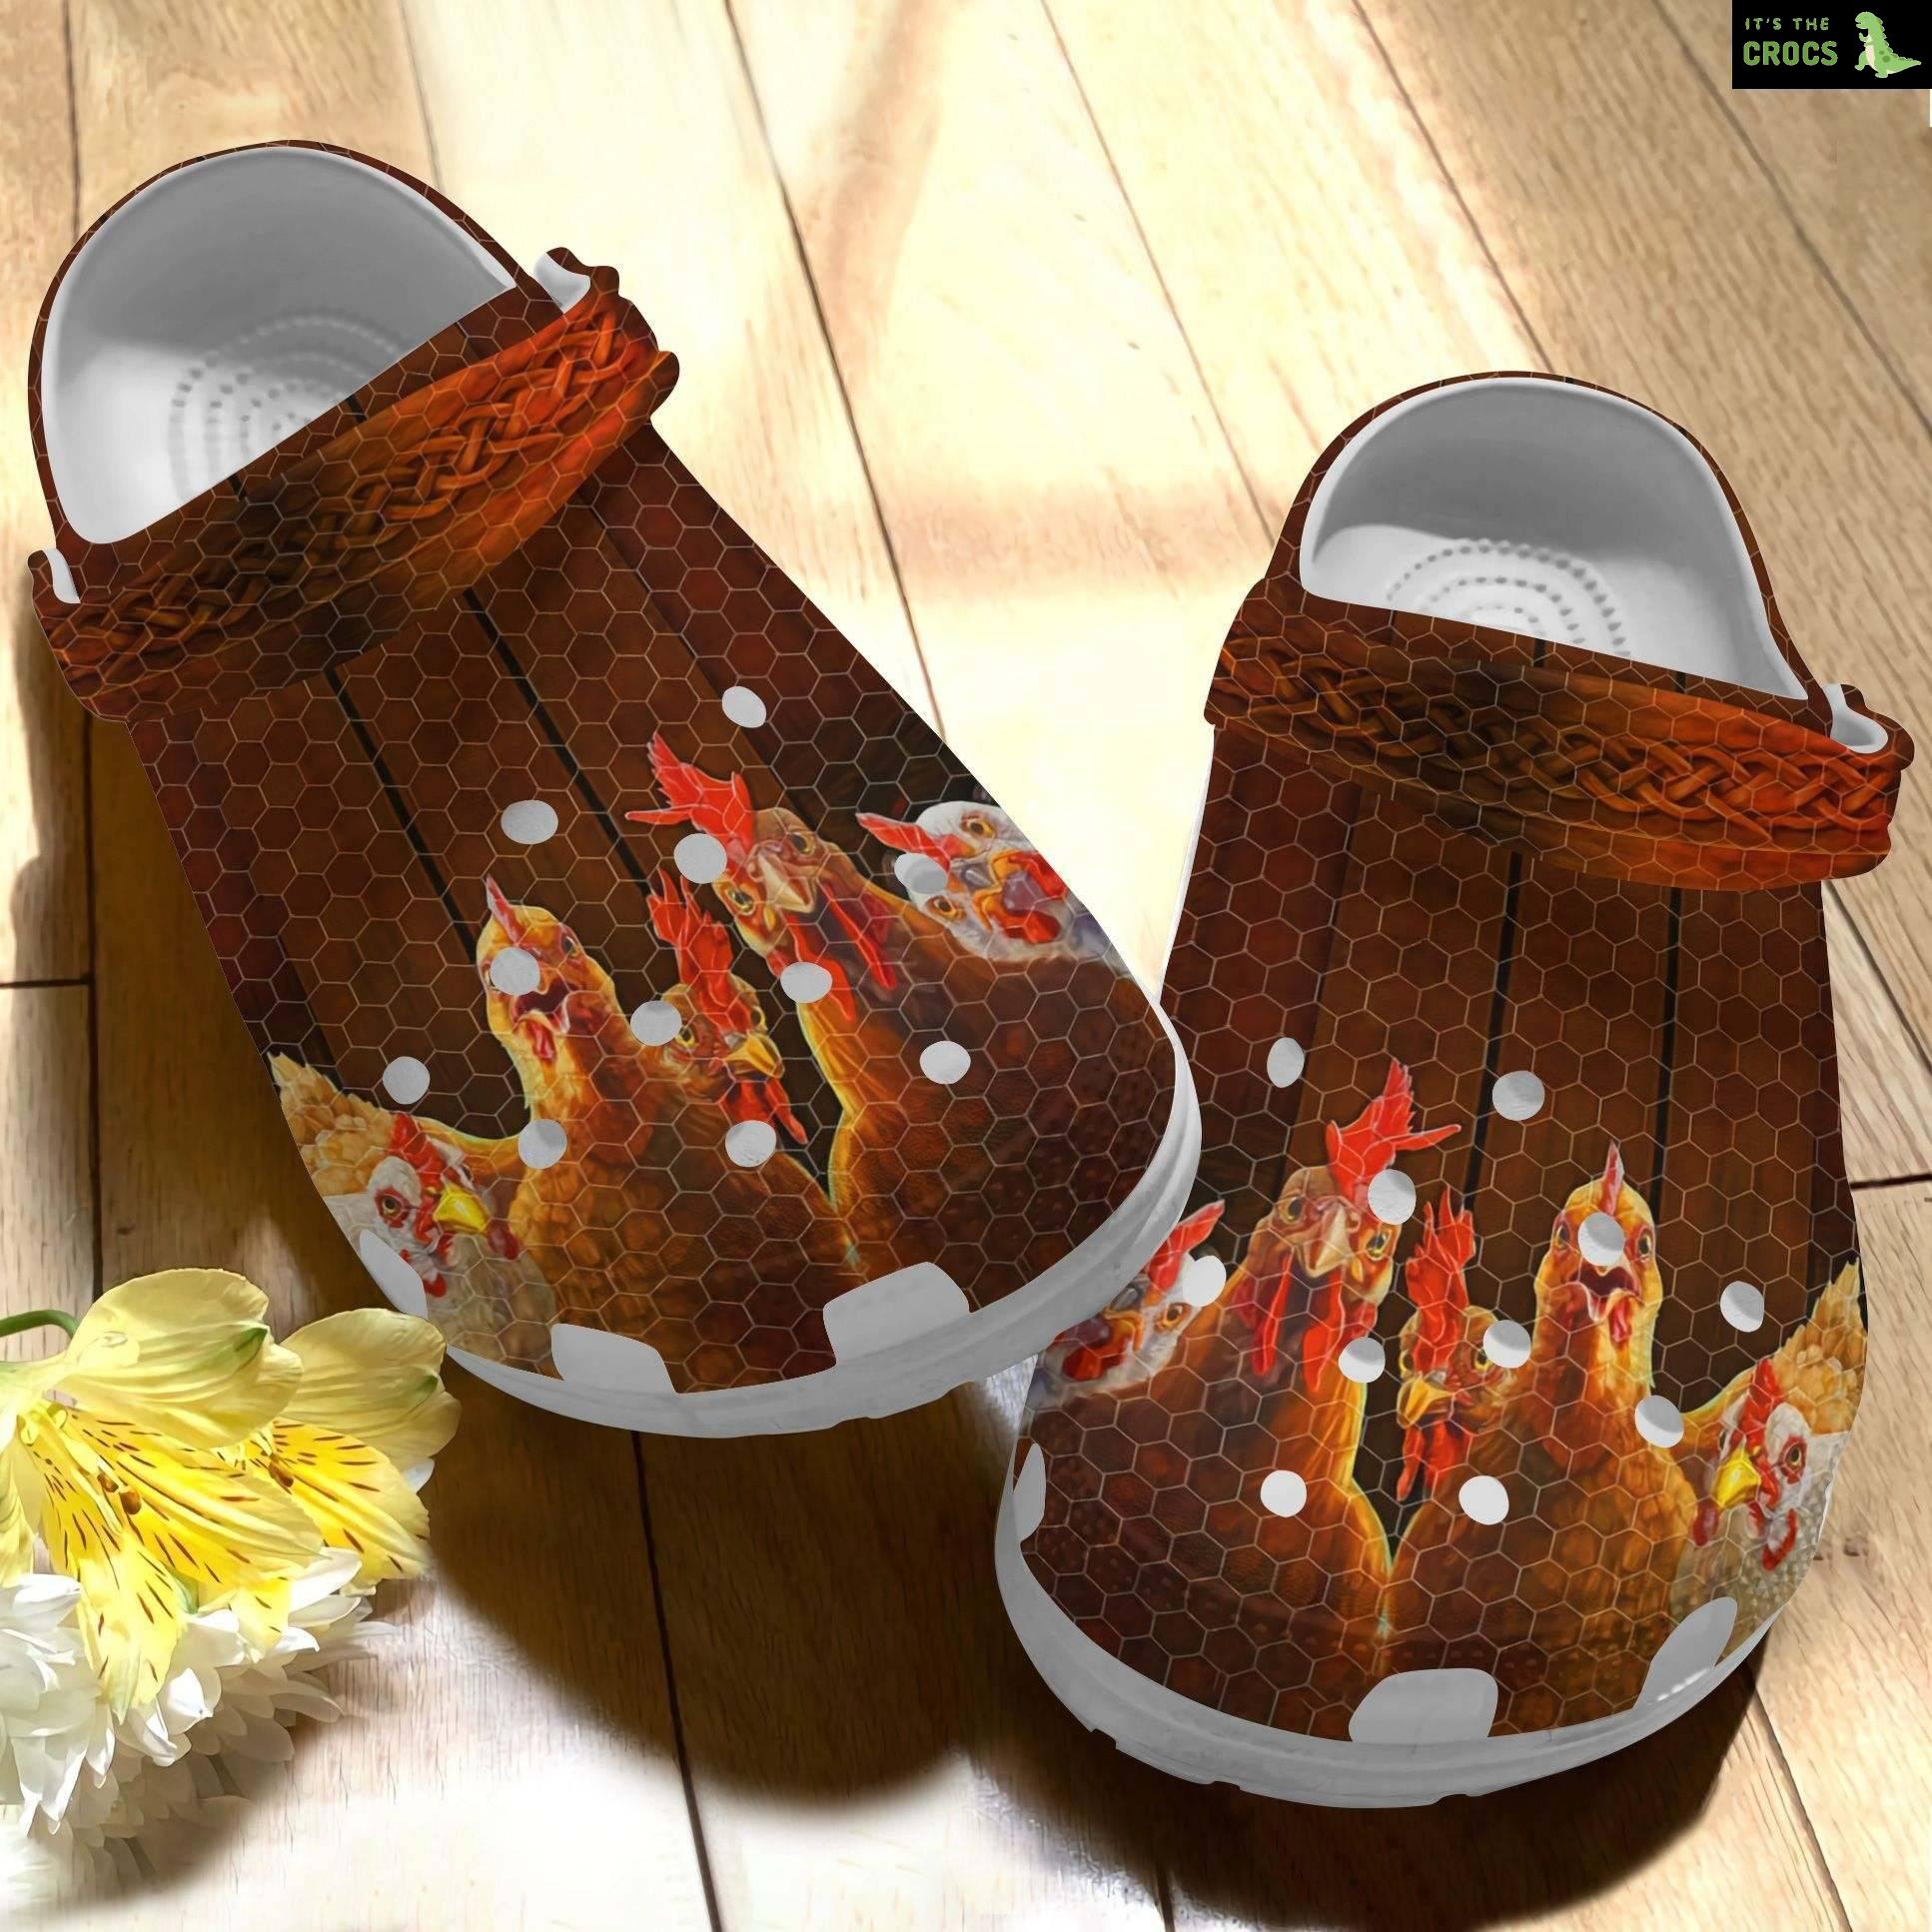 Barn Chicken Custom Crocs Clog Shoes For Mother Day – Chickens Outdoor Crocs Clog Shoes Gifts For Mom Dad